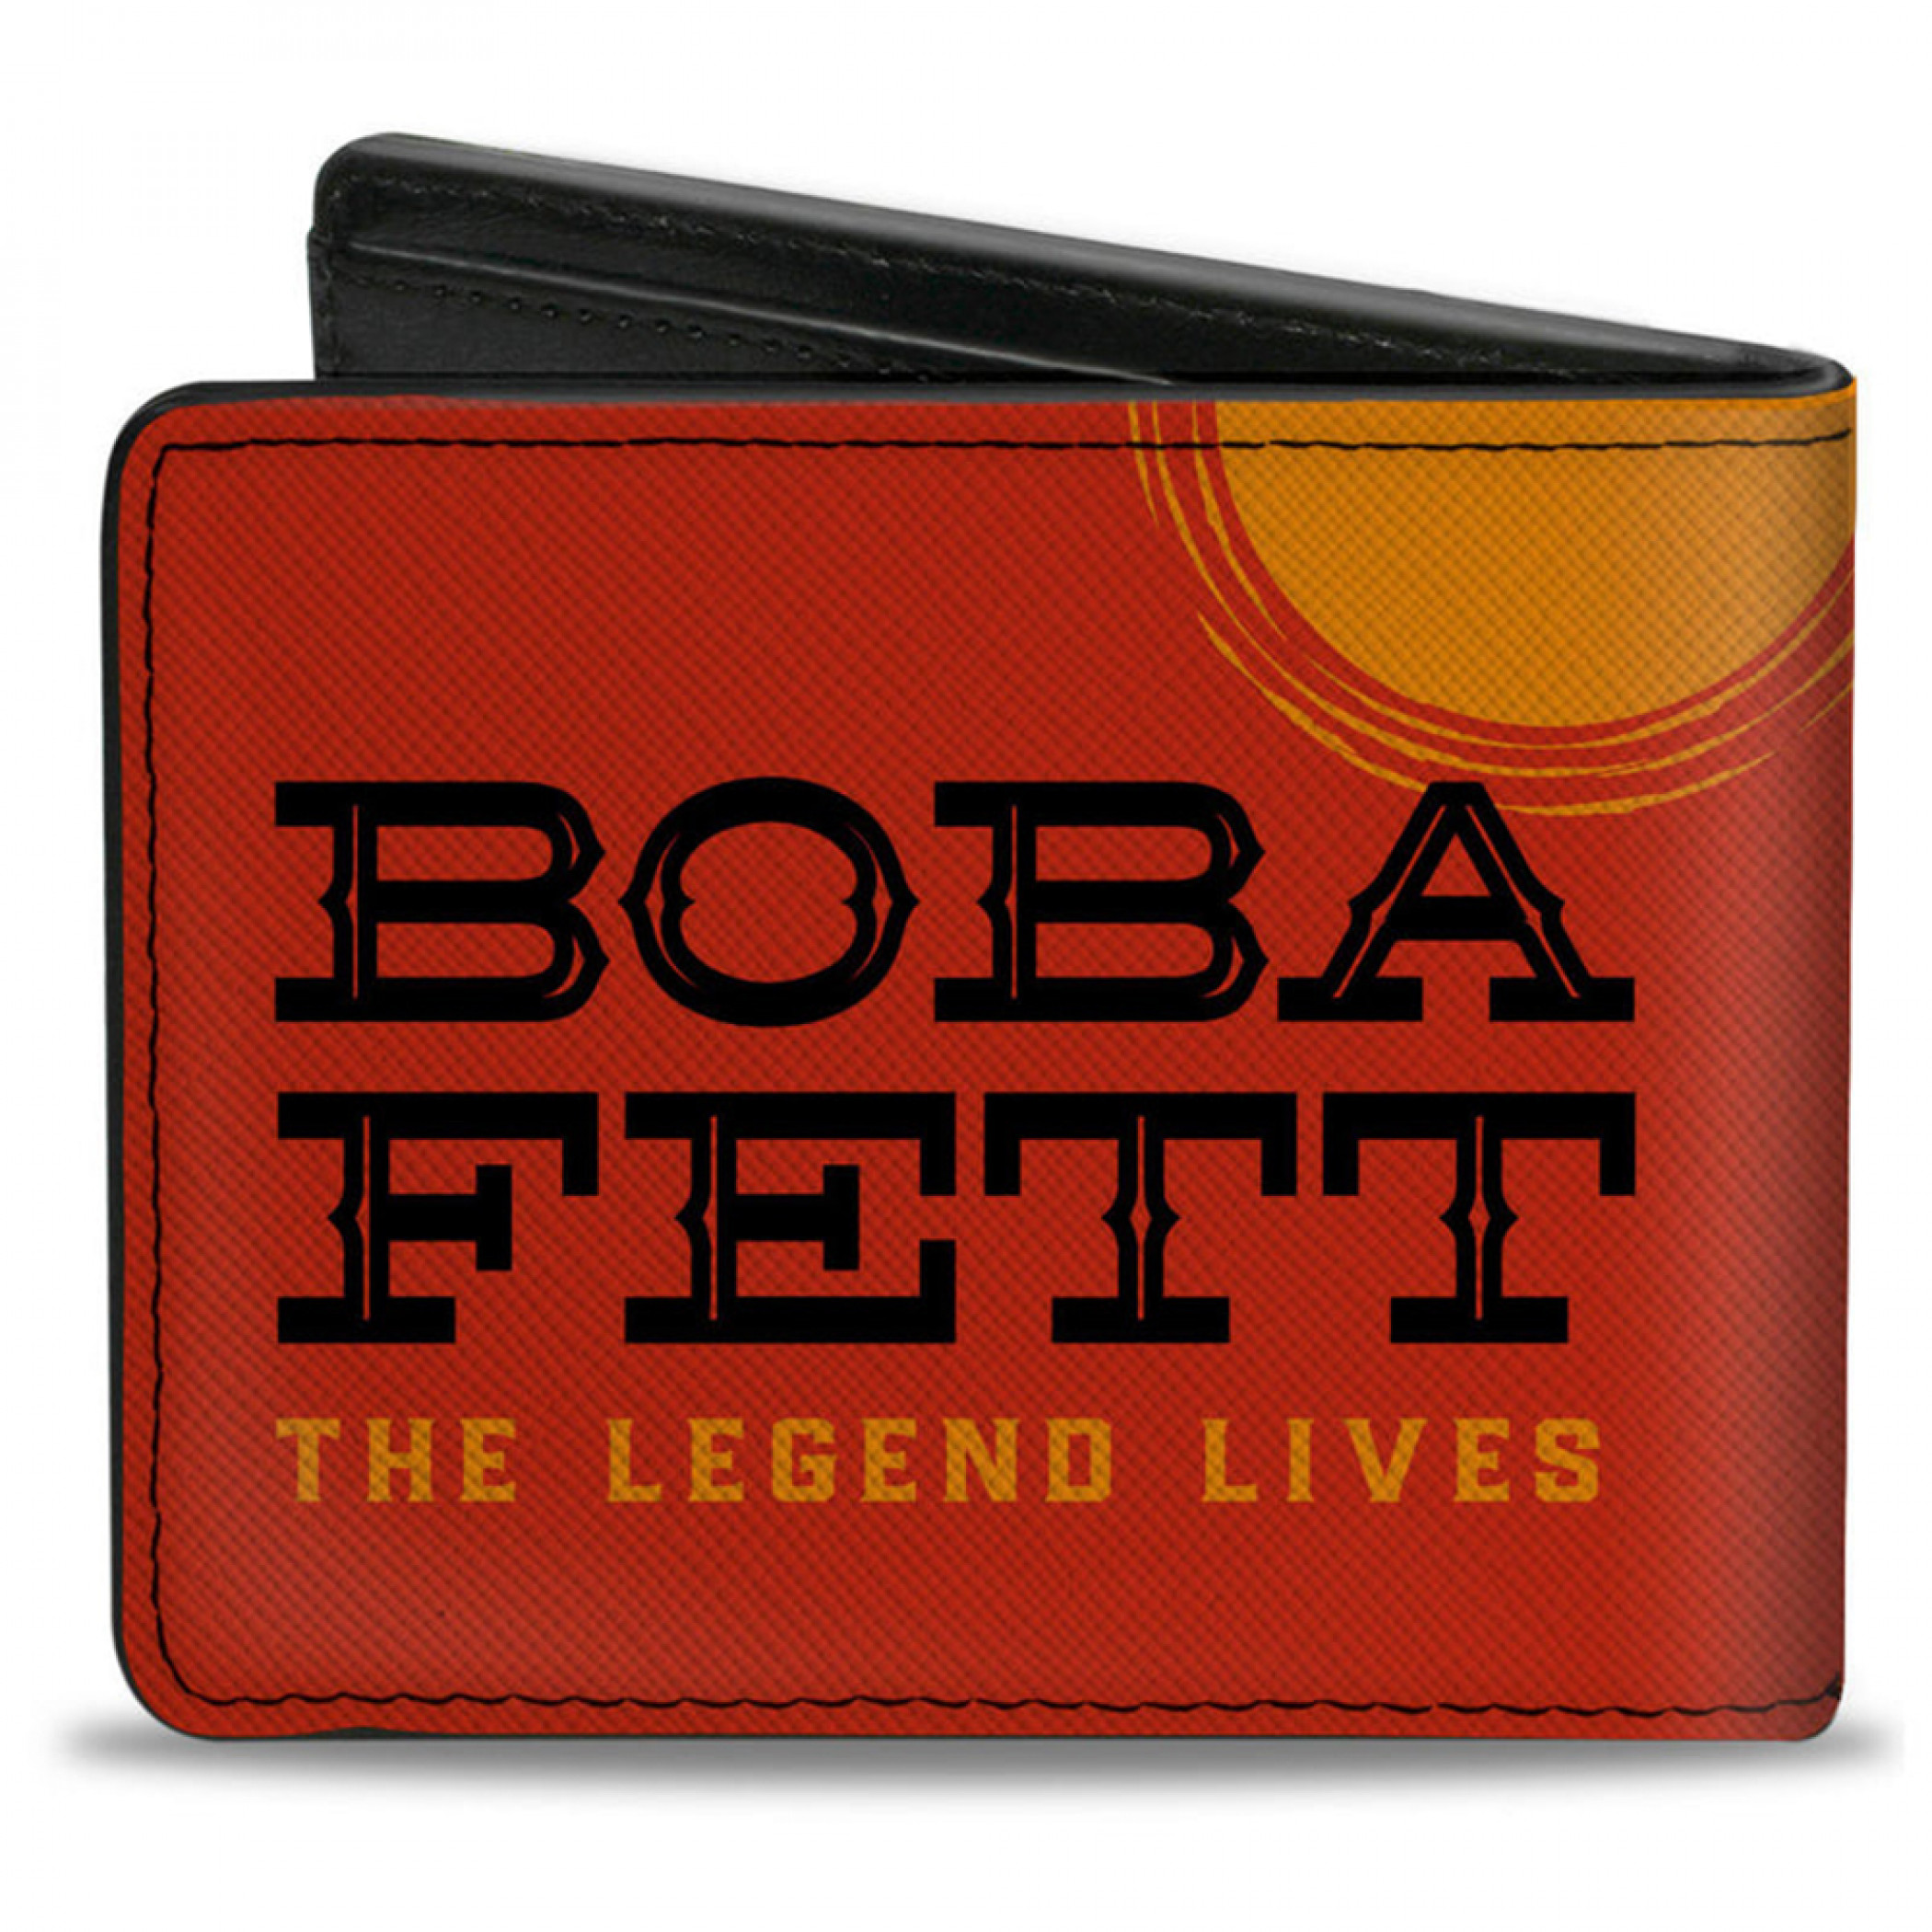 The Book of Boba Fett The Legend Lives Silhouette Bi-Fold Wallet